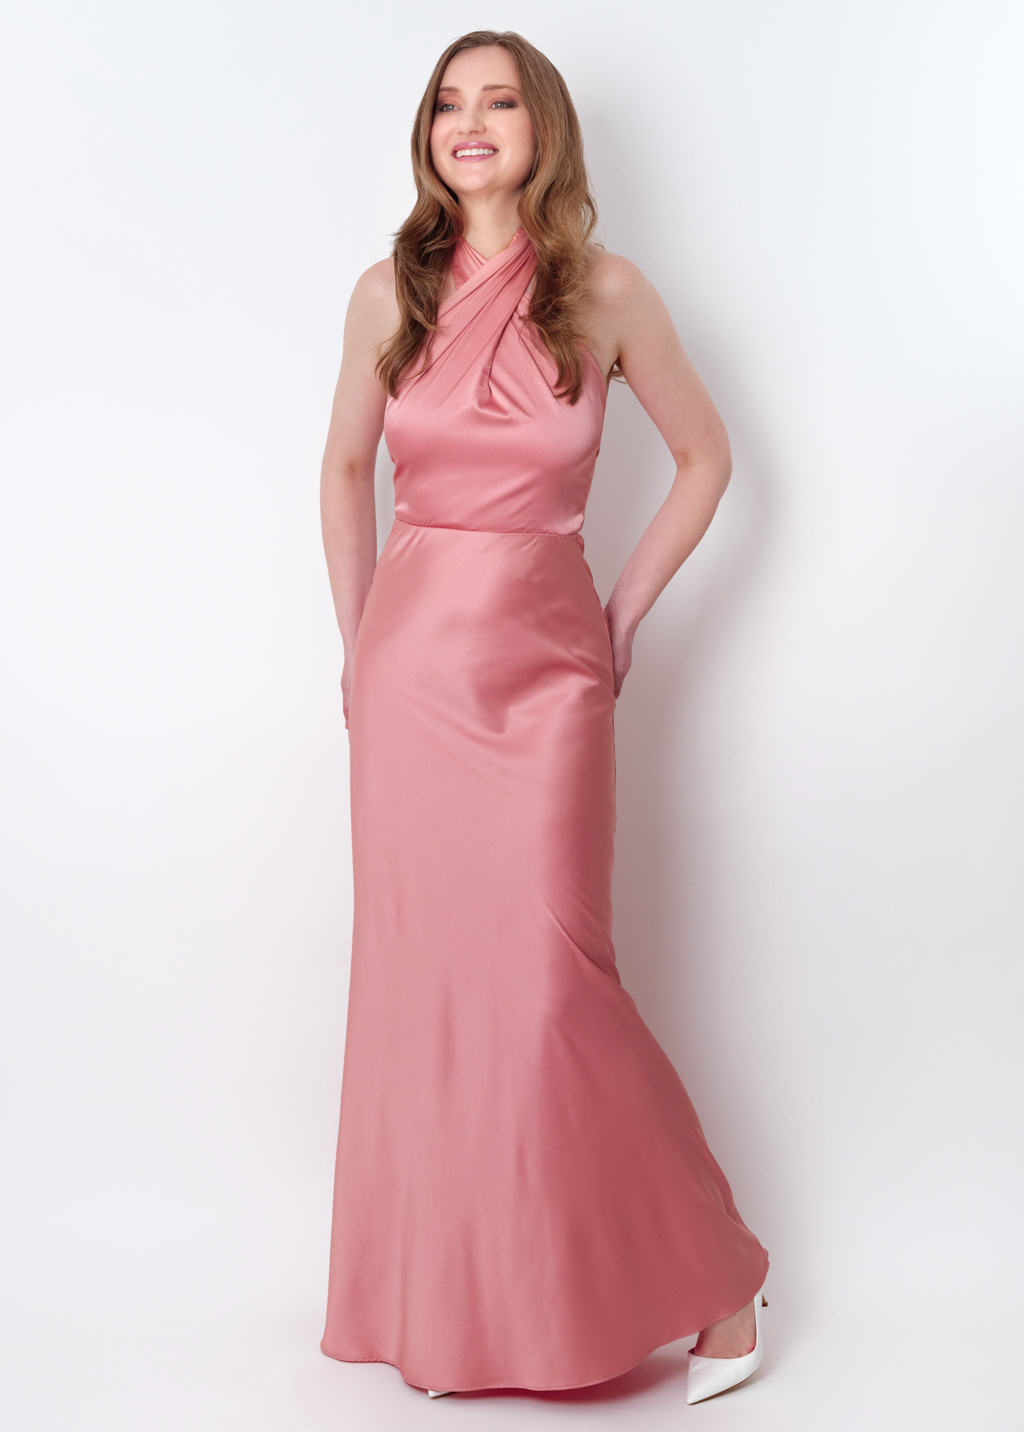 Blush pink silk long halter dress